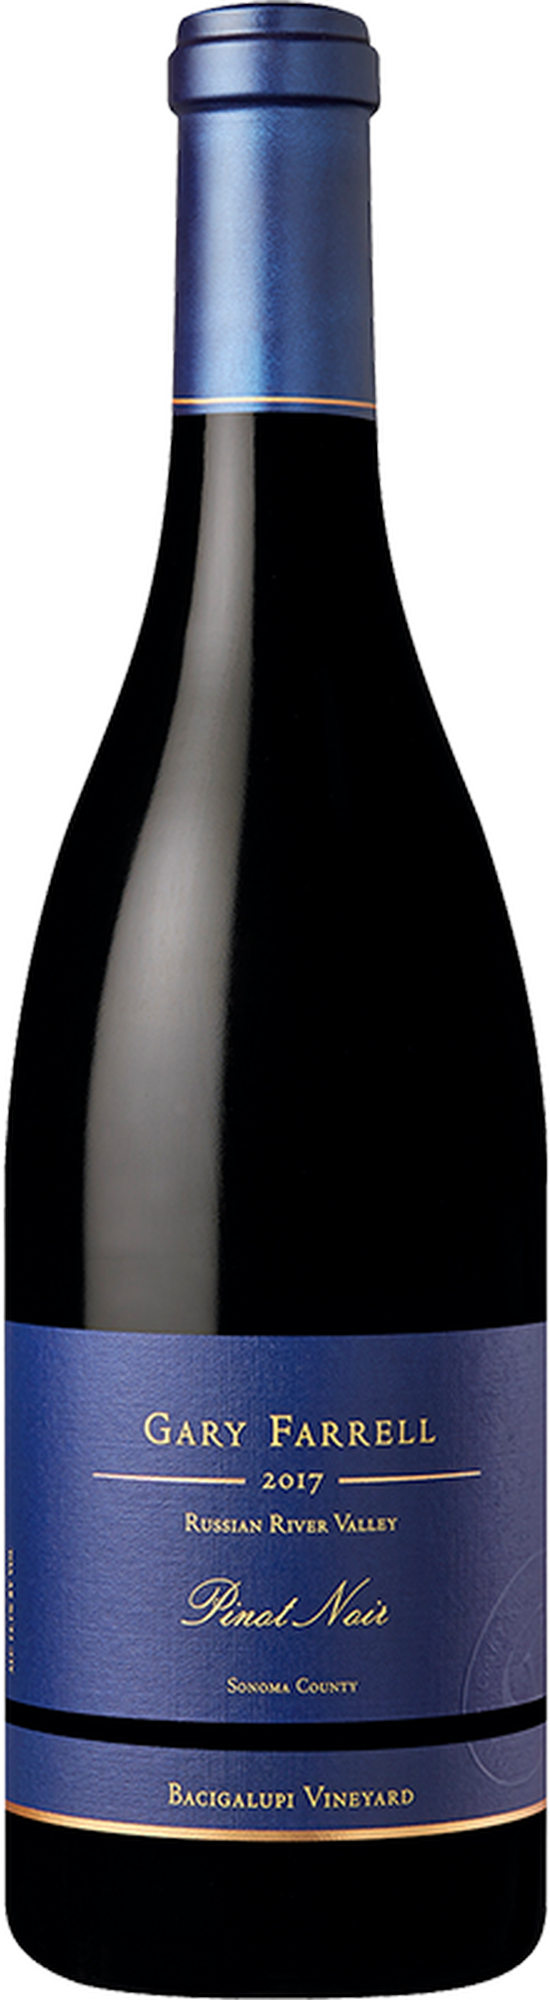 2017 Bacigalupi Vineyard Pinot Noir